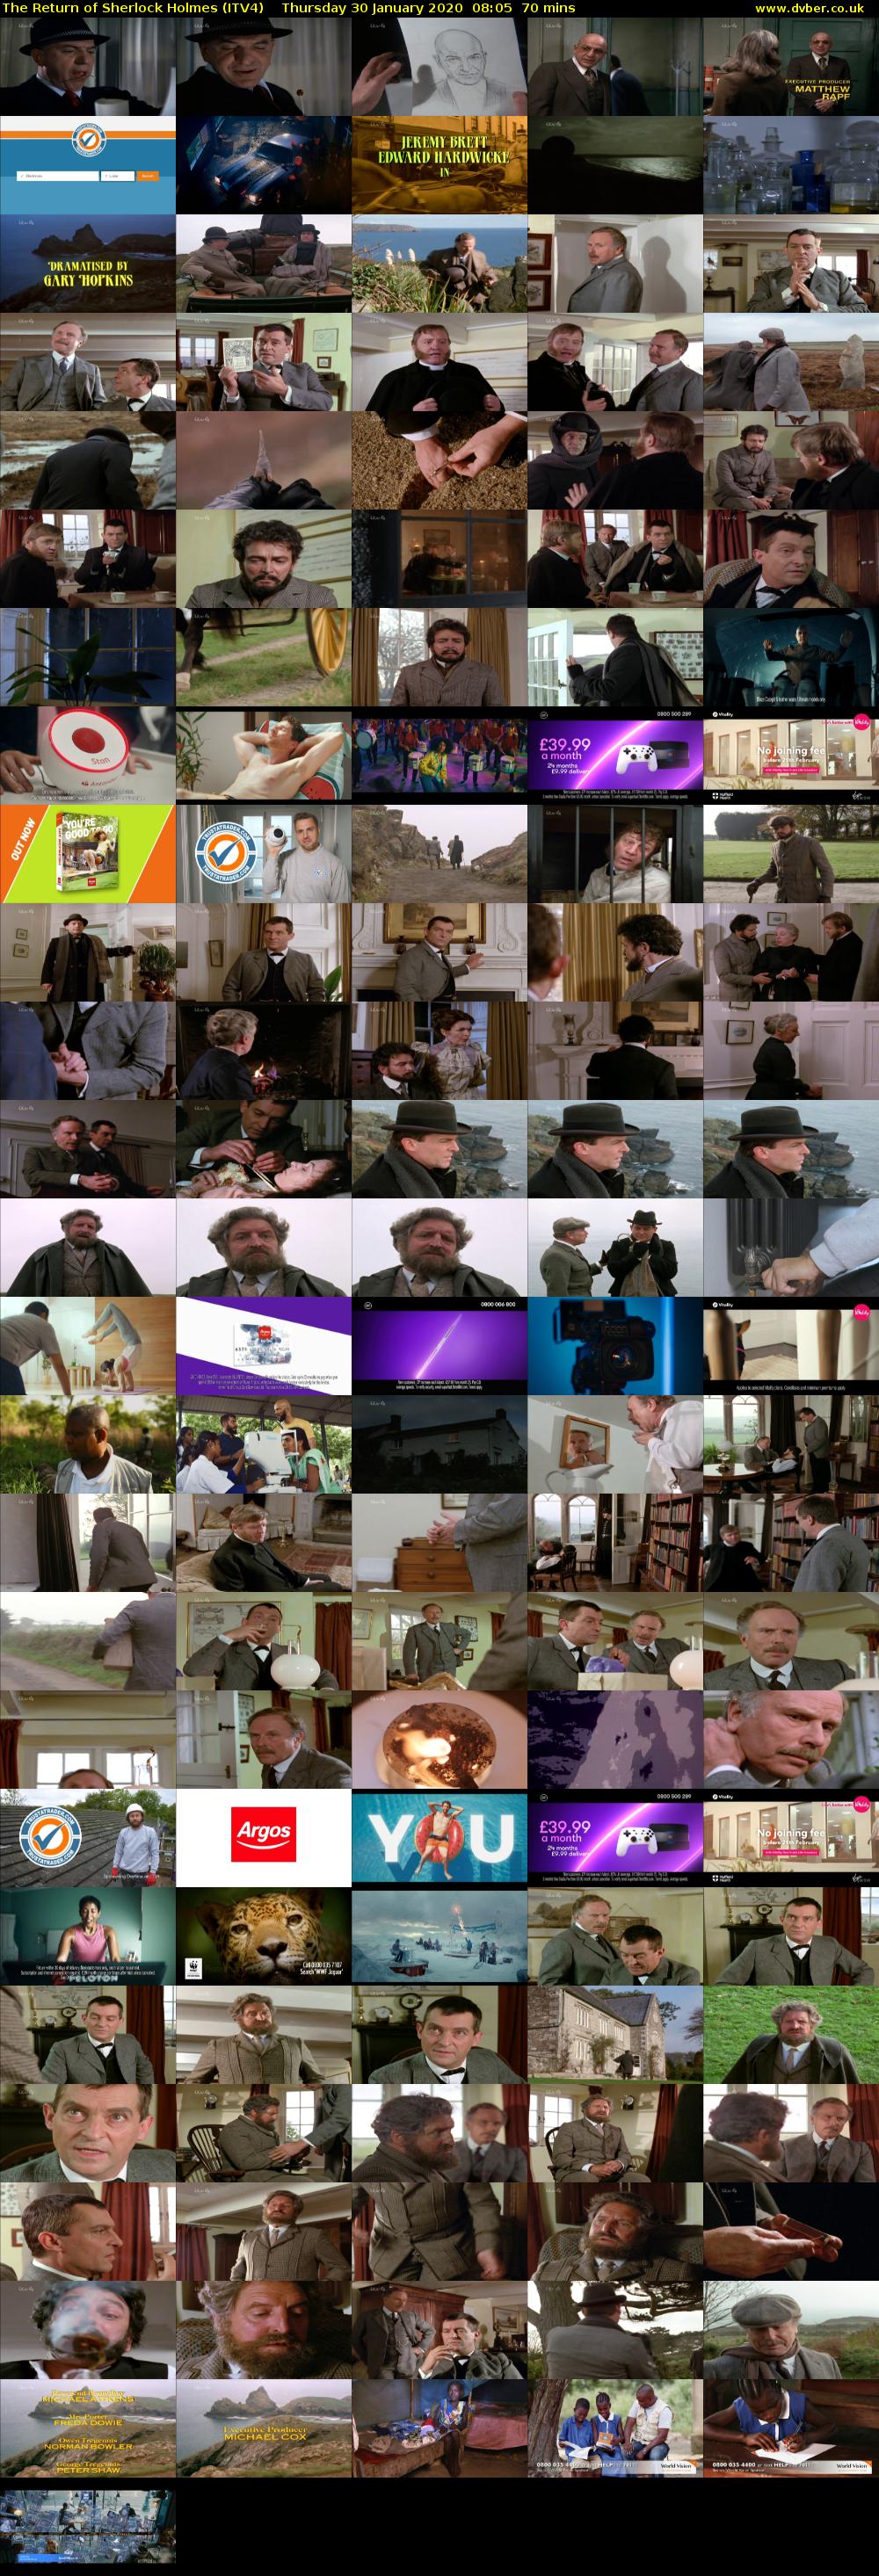 The Return of Sherlock Holmes (ITV4) Thursday 30 January 2020 08:05 - 09:15